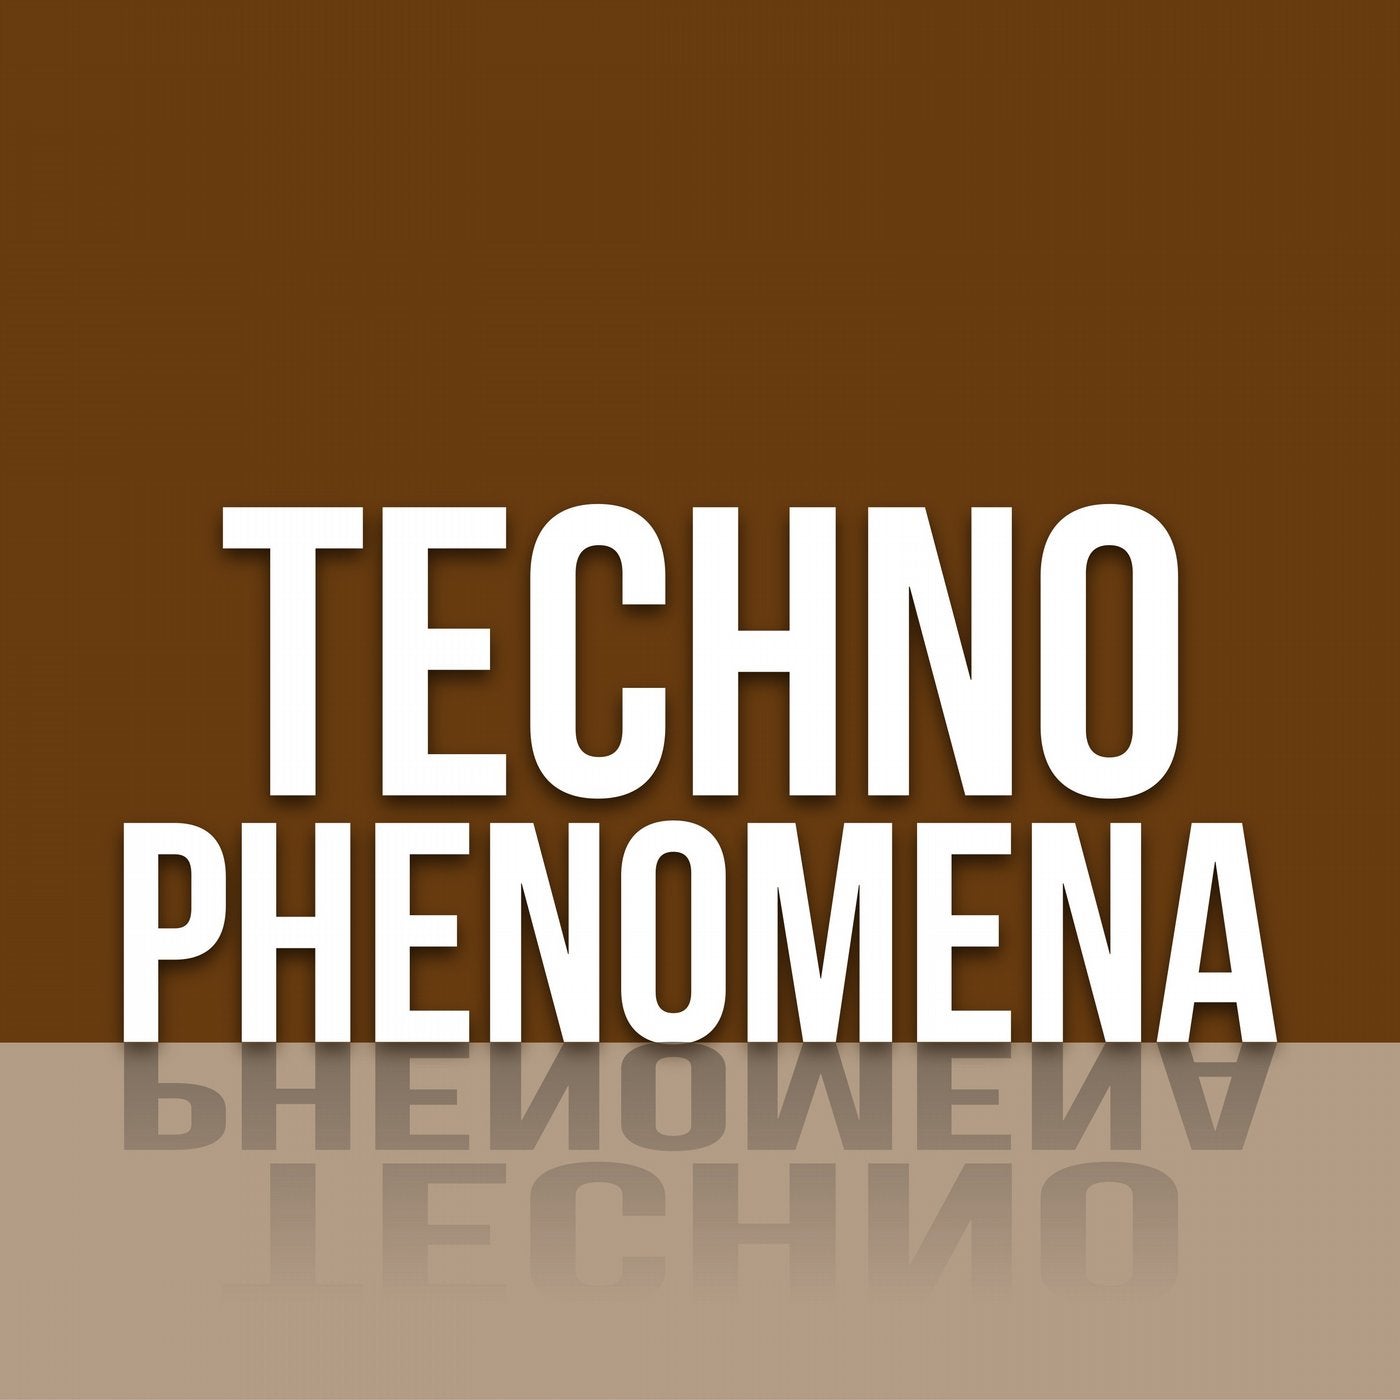 Techno Phenomena